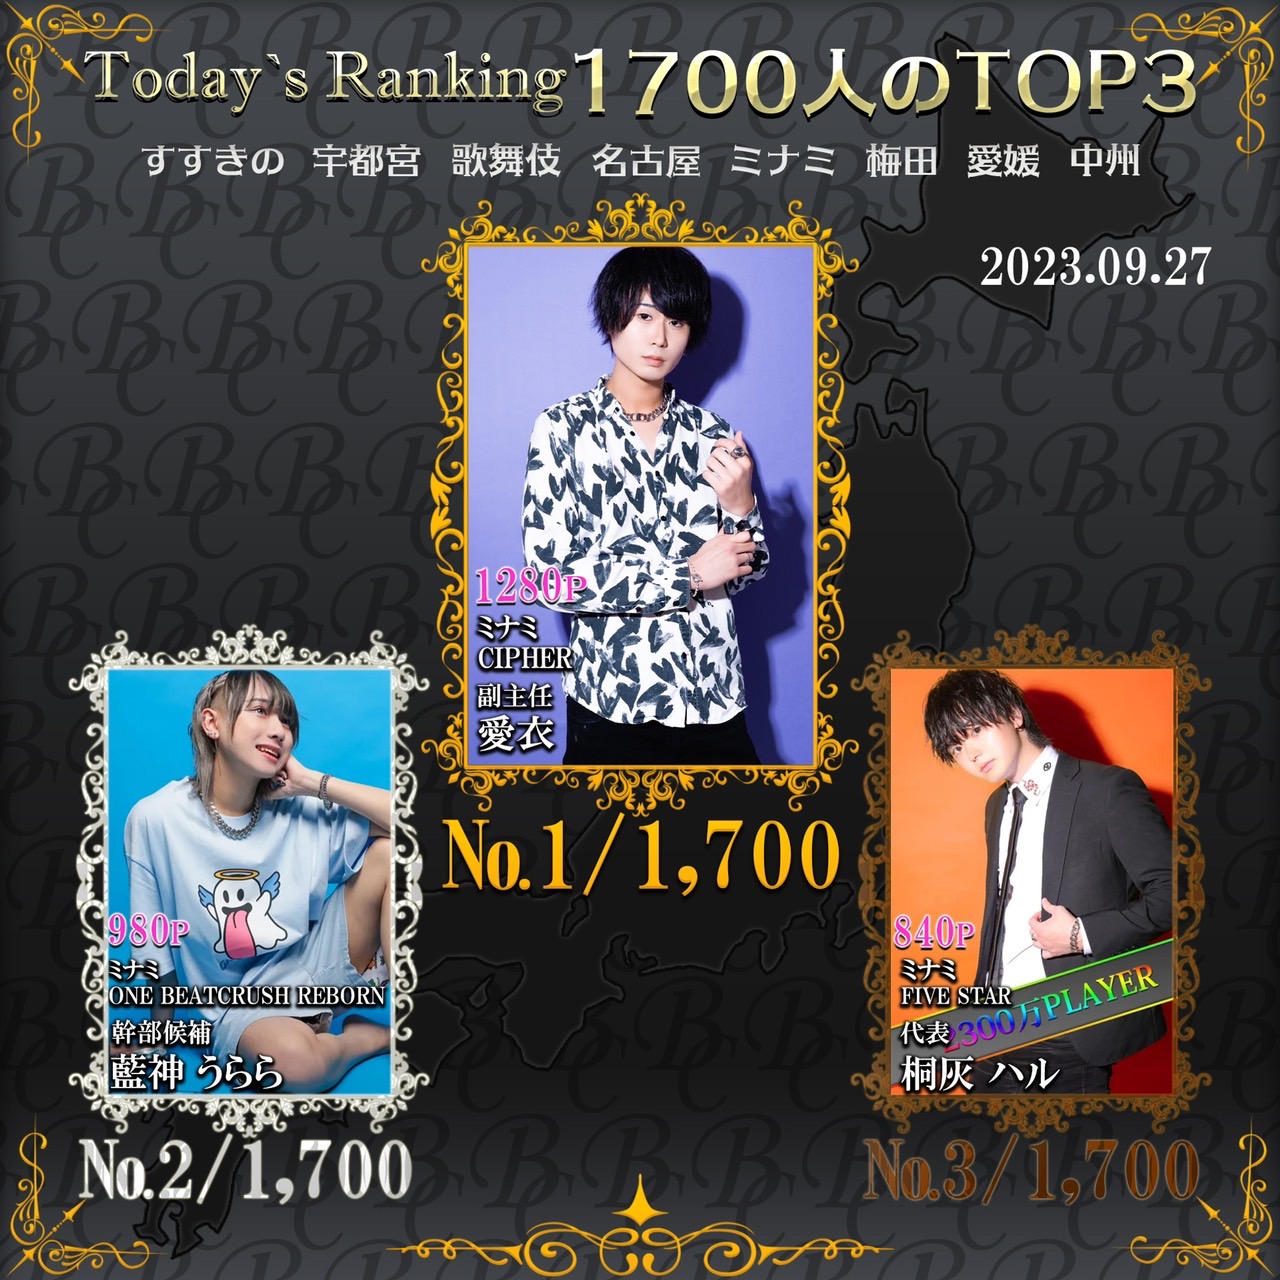 9/27 Today’s Ranking